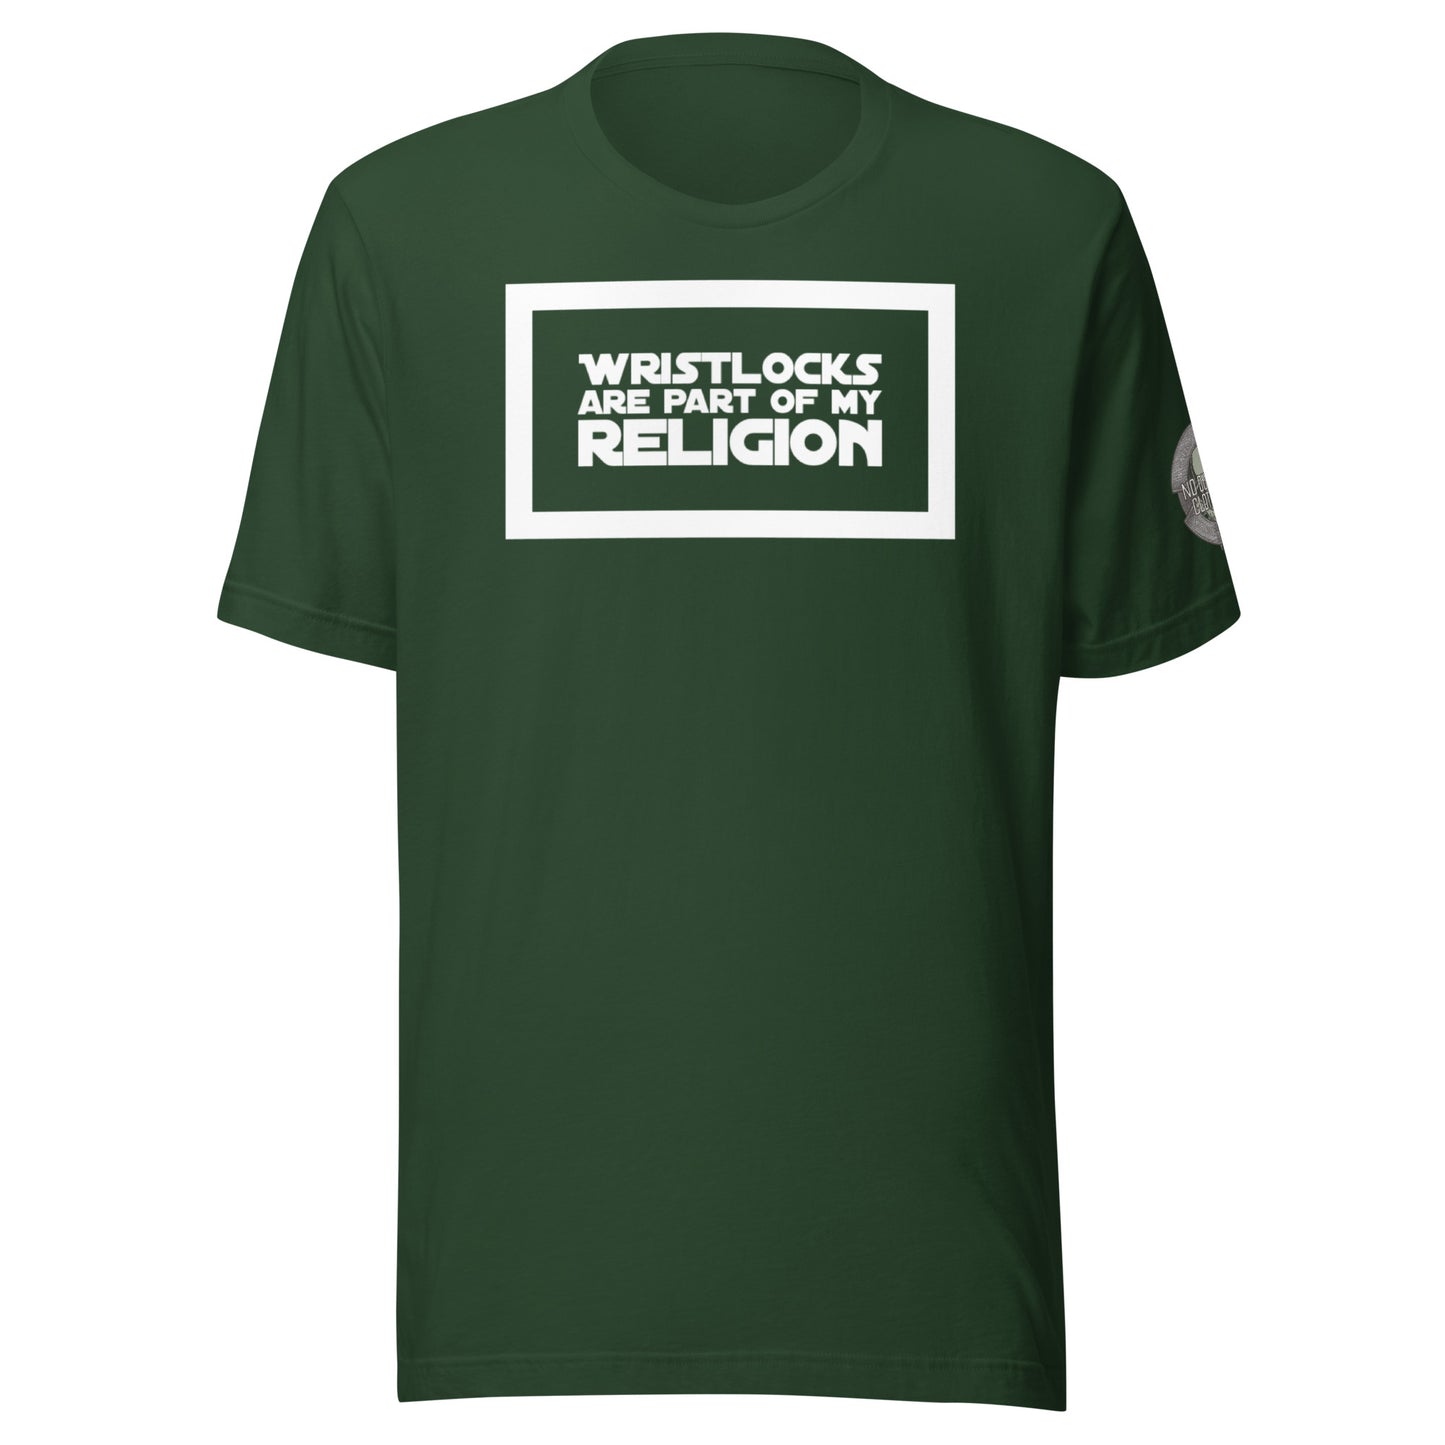 Wristlock Religion Shirt